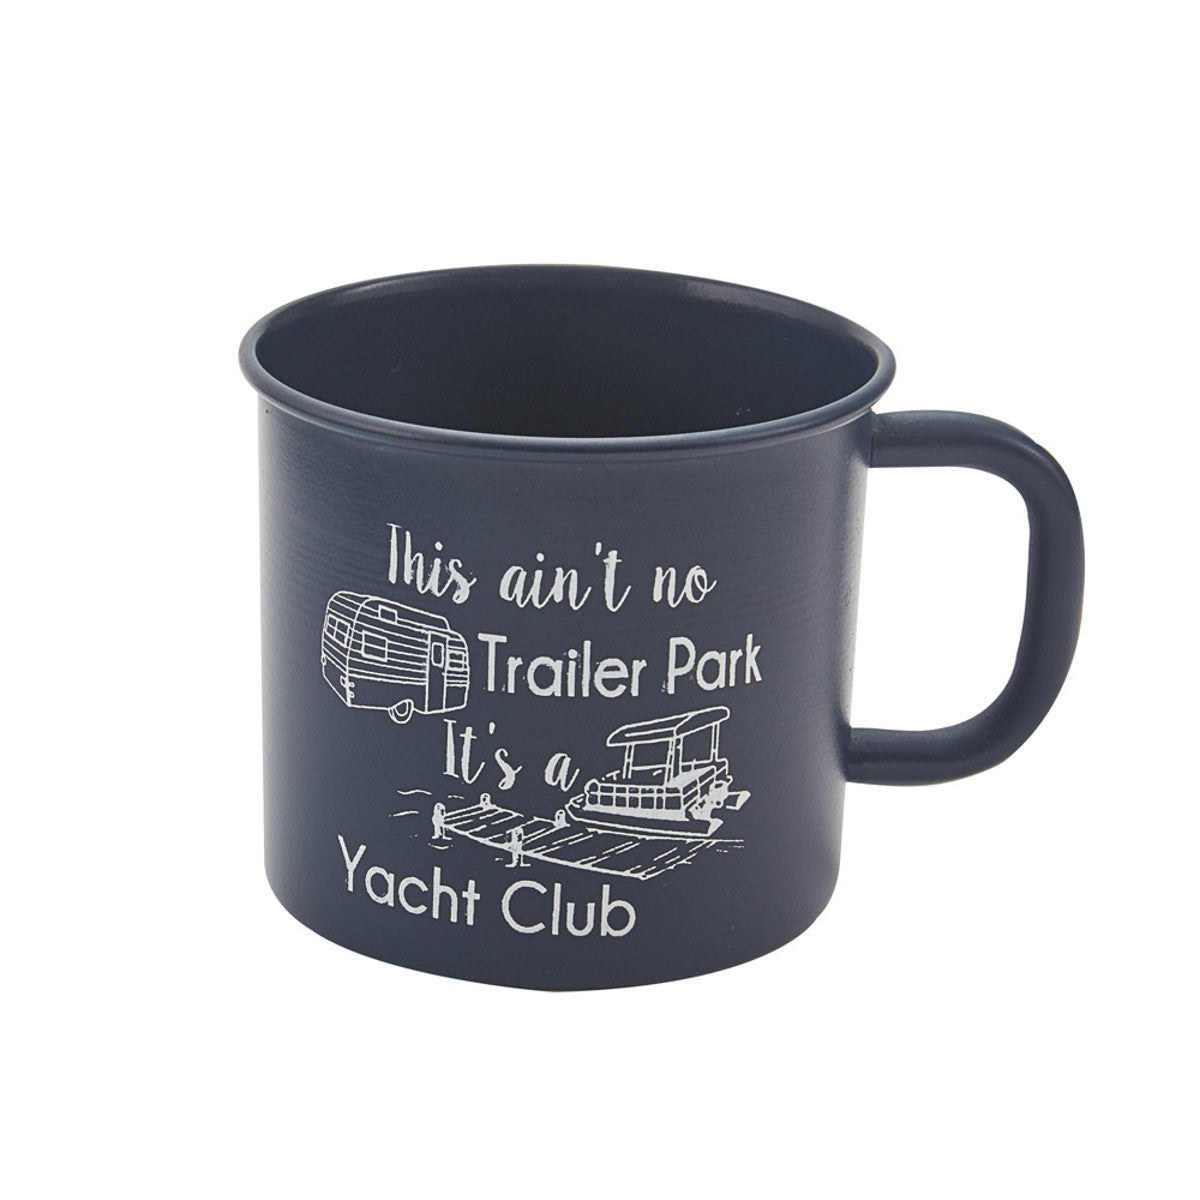 Yacht Club Enamelware Mug - Set of 4 Park Designs